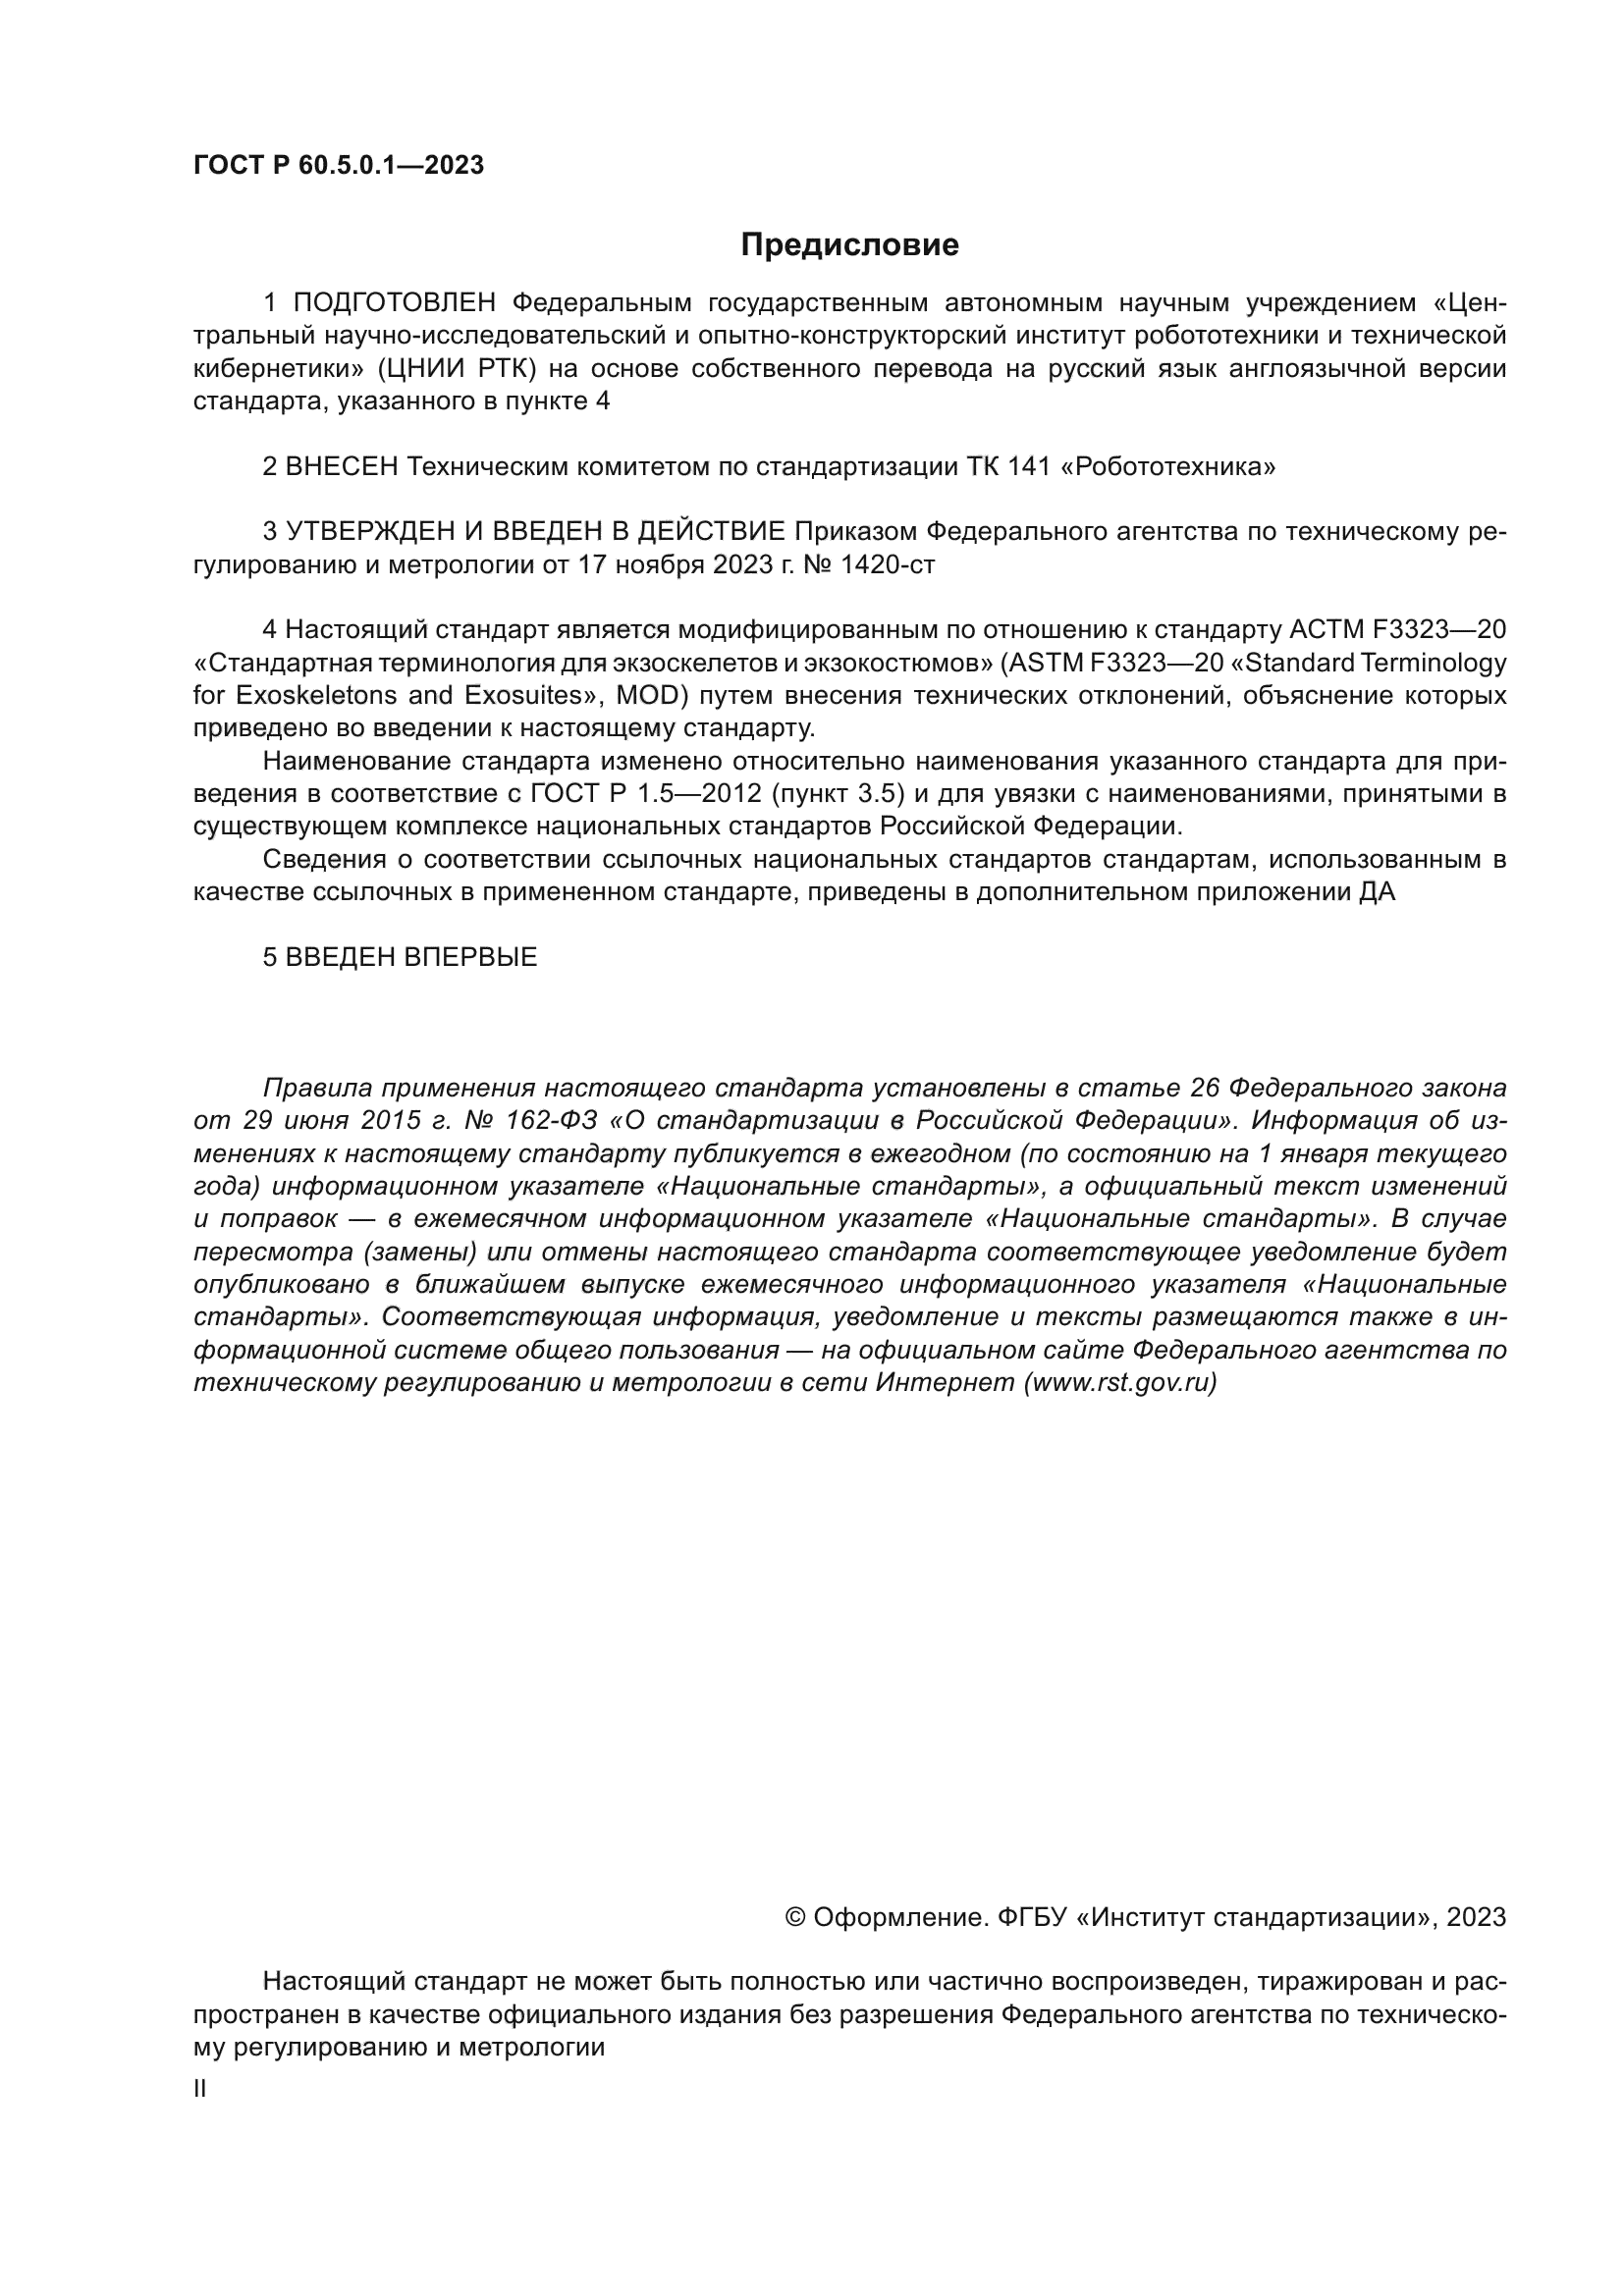 ГОСТ Р 60.5.0.1-2023